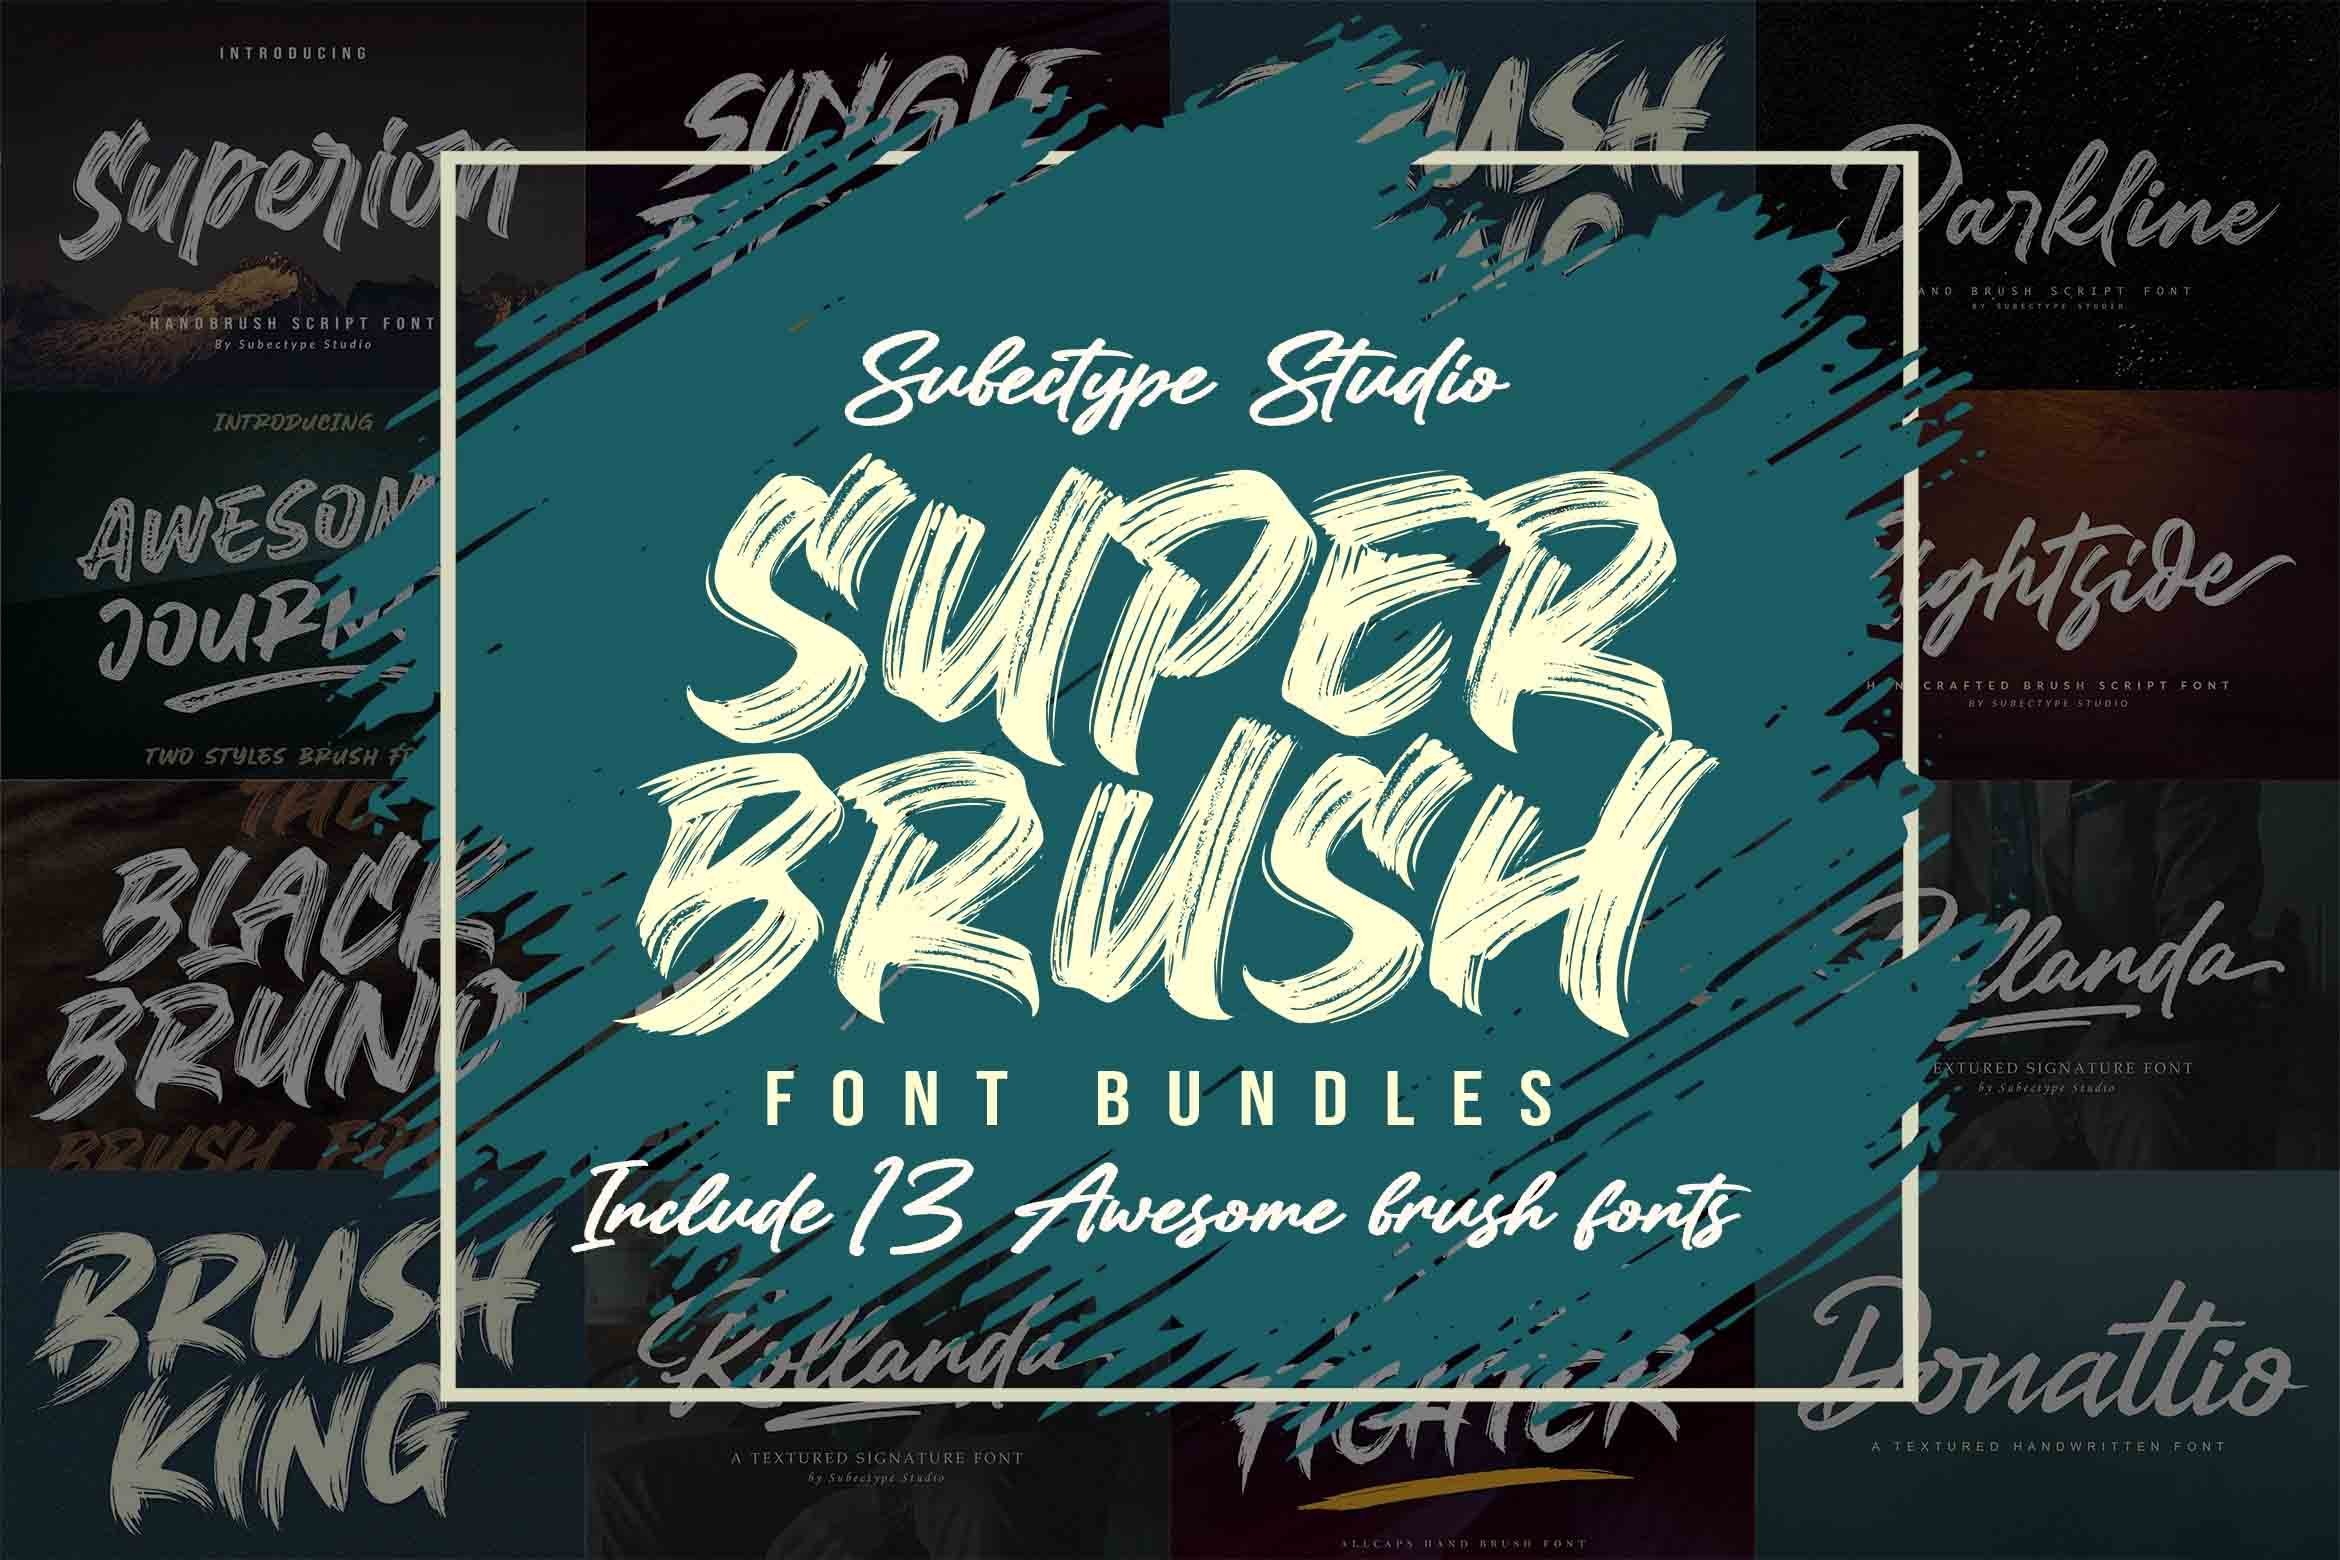 Super Brush - Brush Font Bundle cover image.